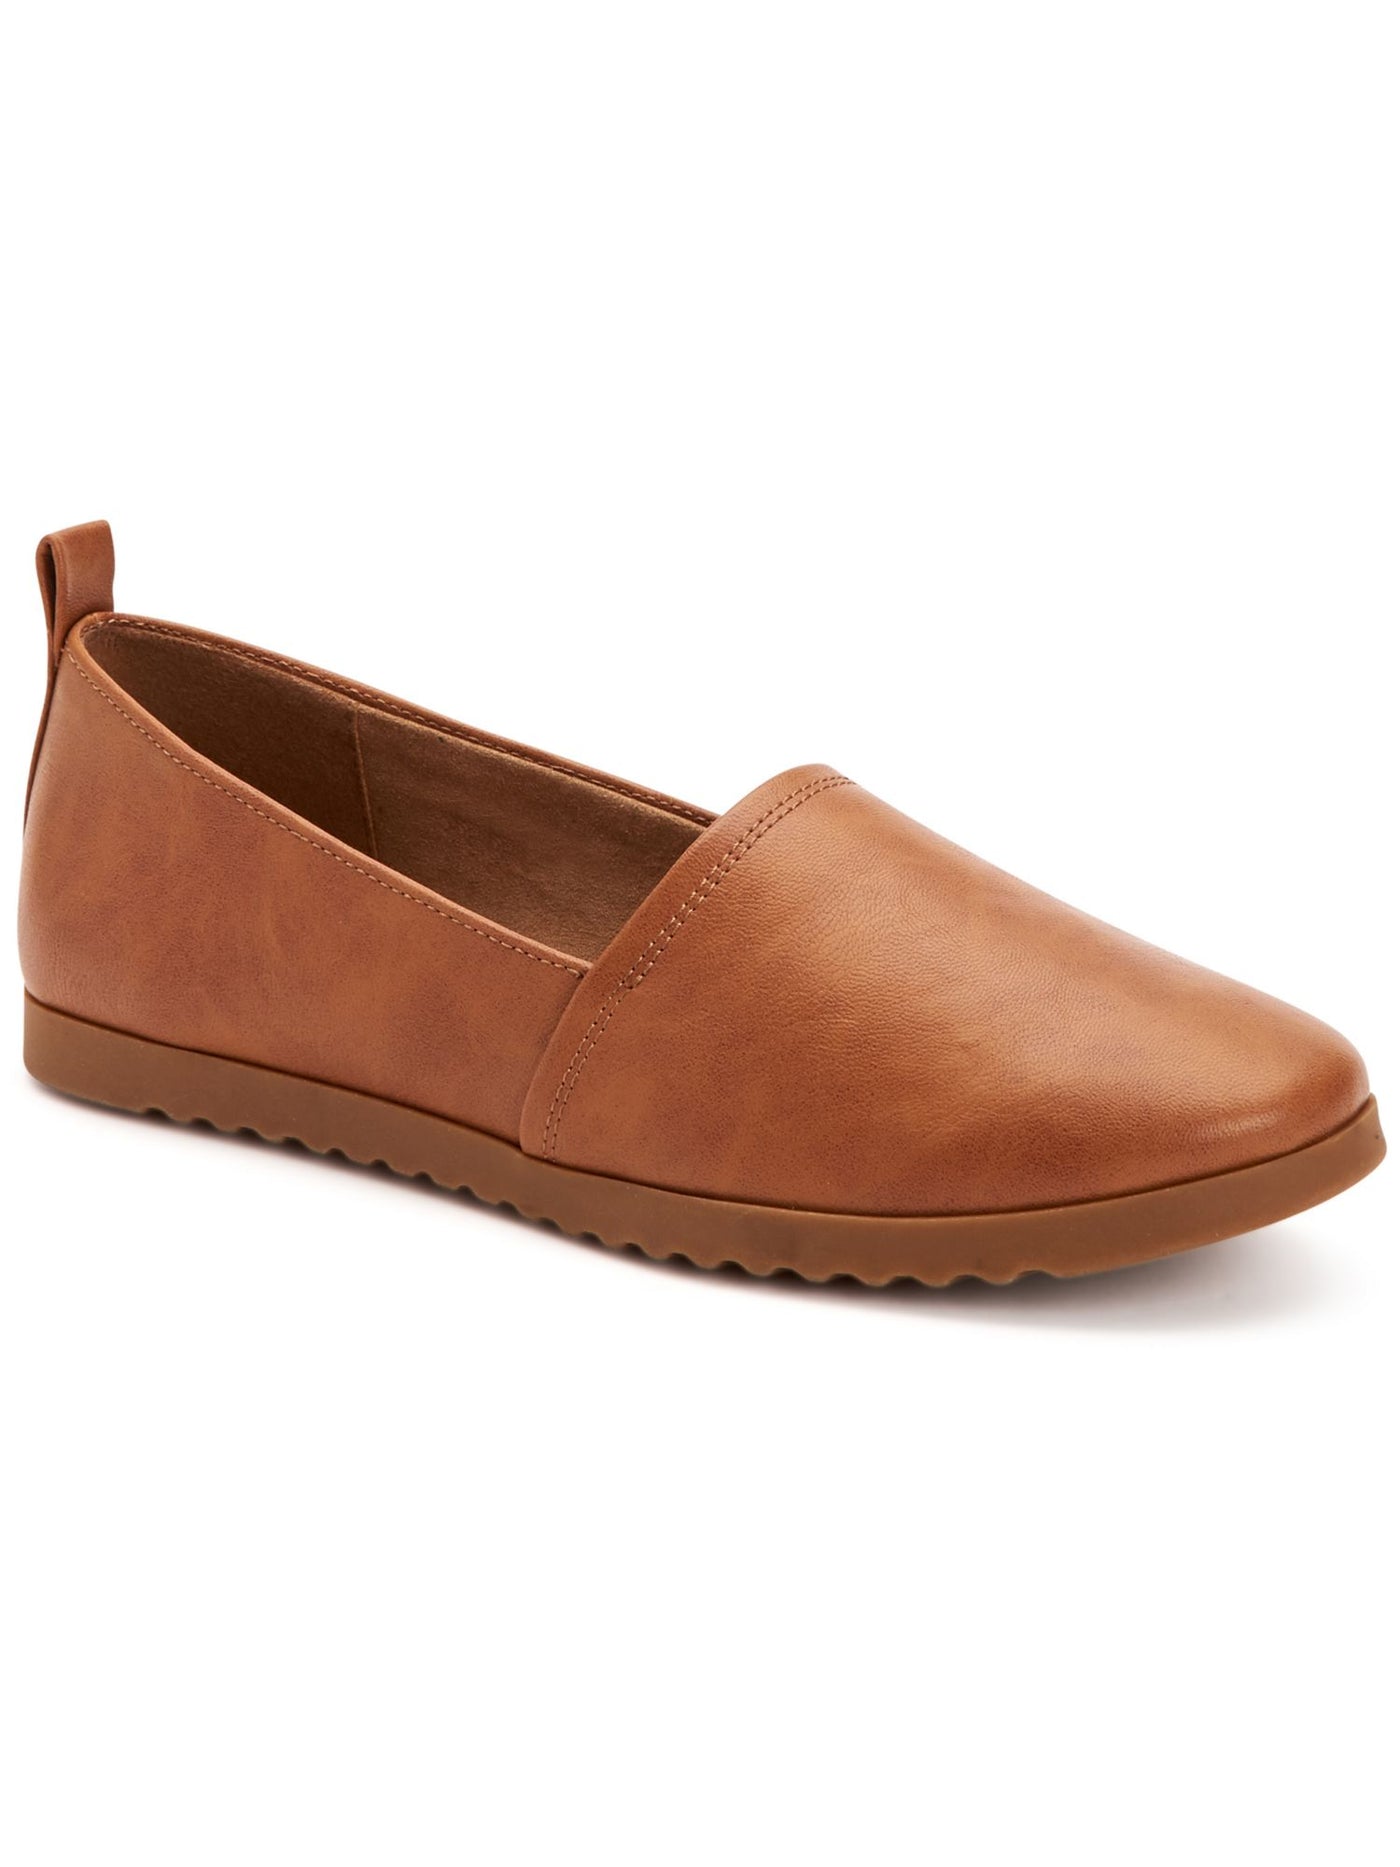 STYLE & COMPANY Womens Beige Padded Goring Nouraa Round Toe Platform Slip On Flats Shoes 8.5 M